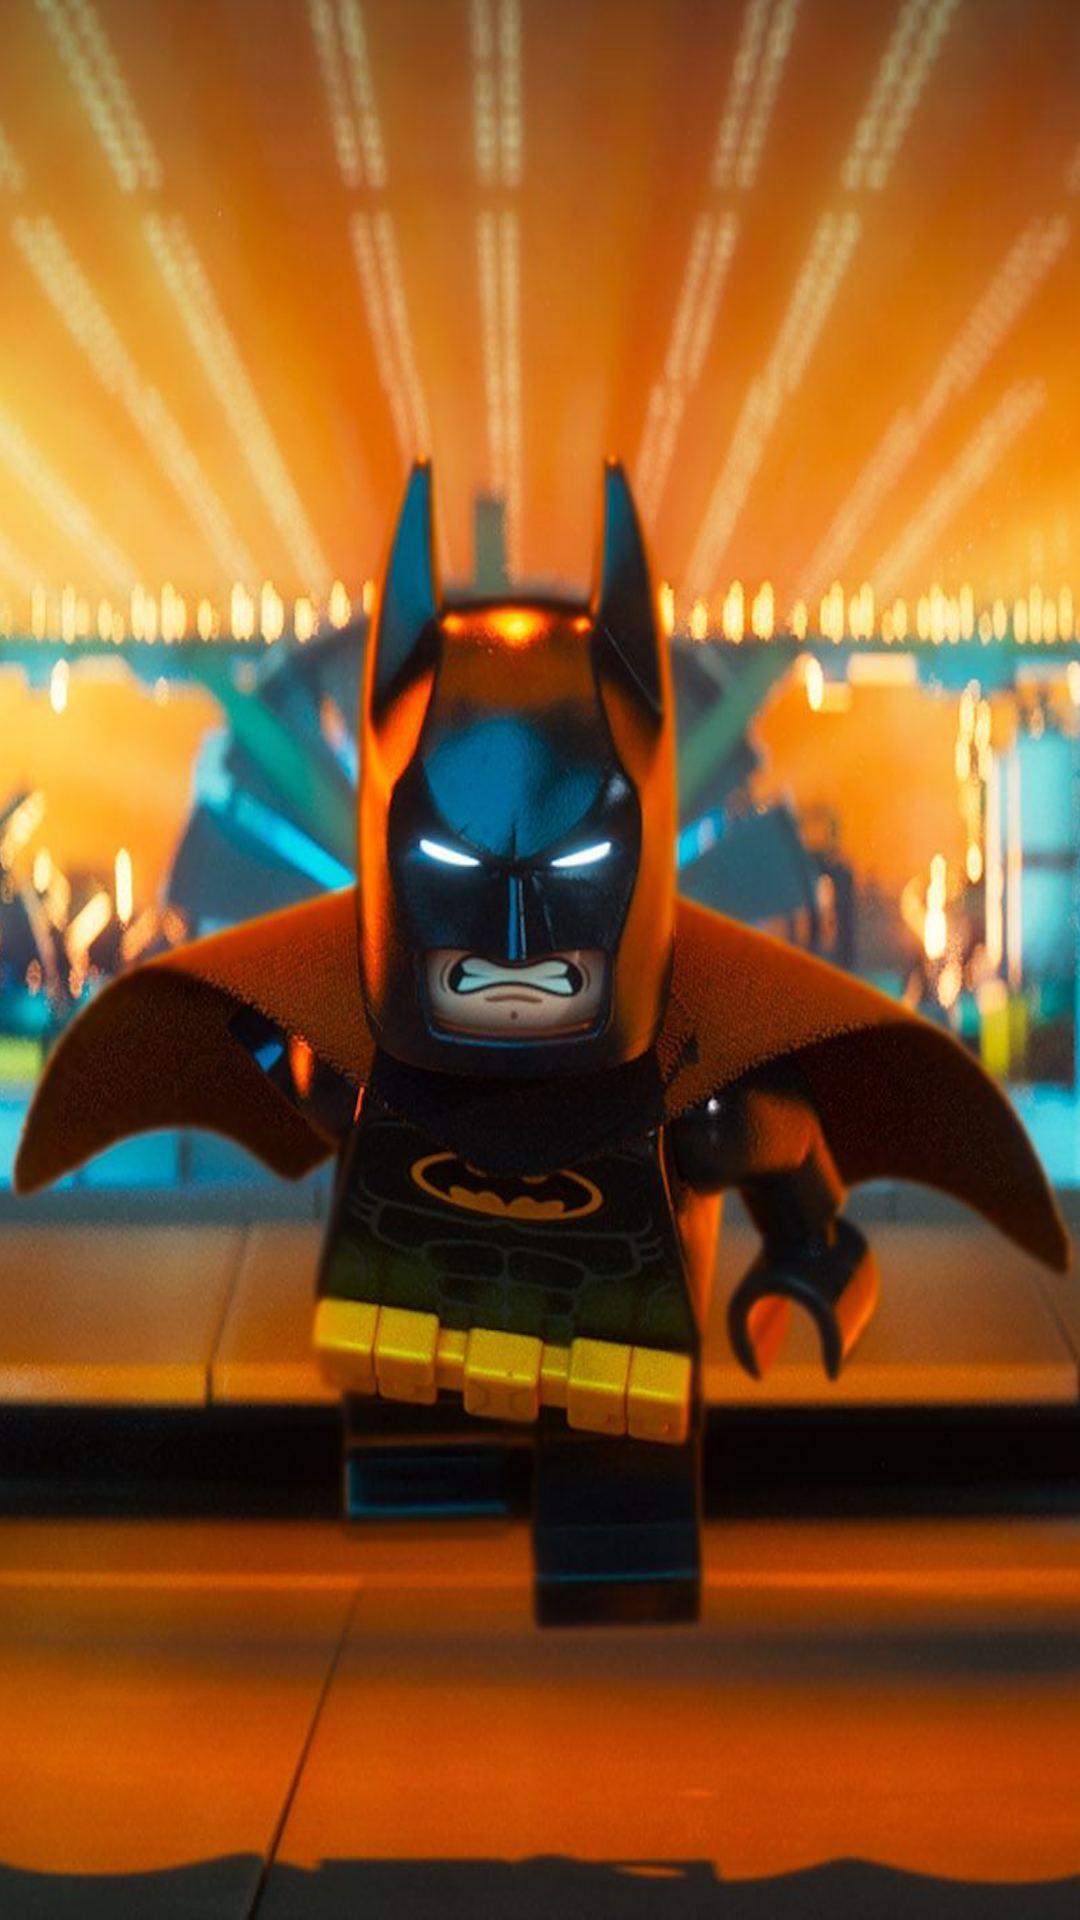 Scary Lego Batman Movie iPhone Wallpaper